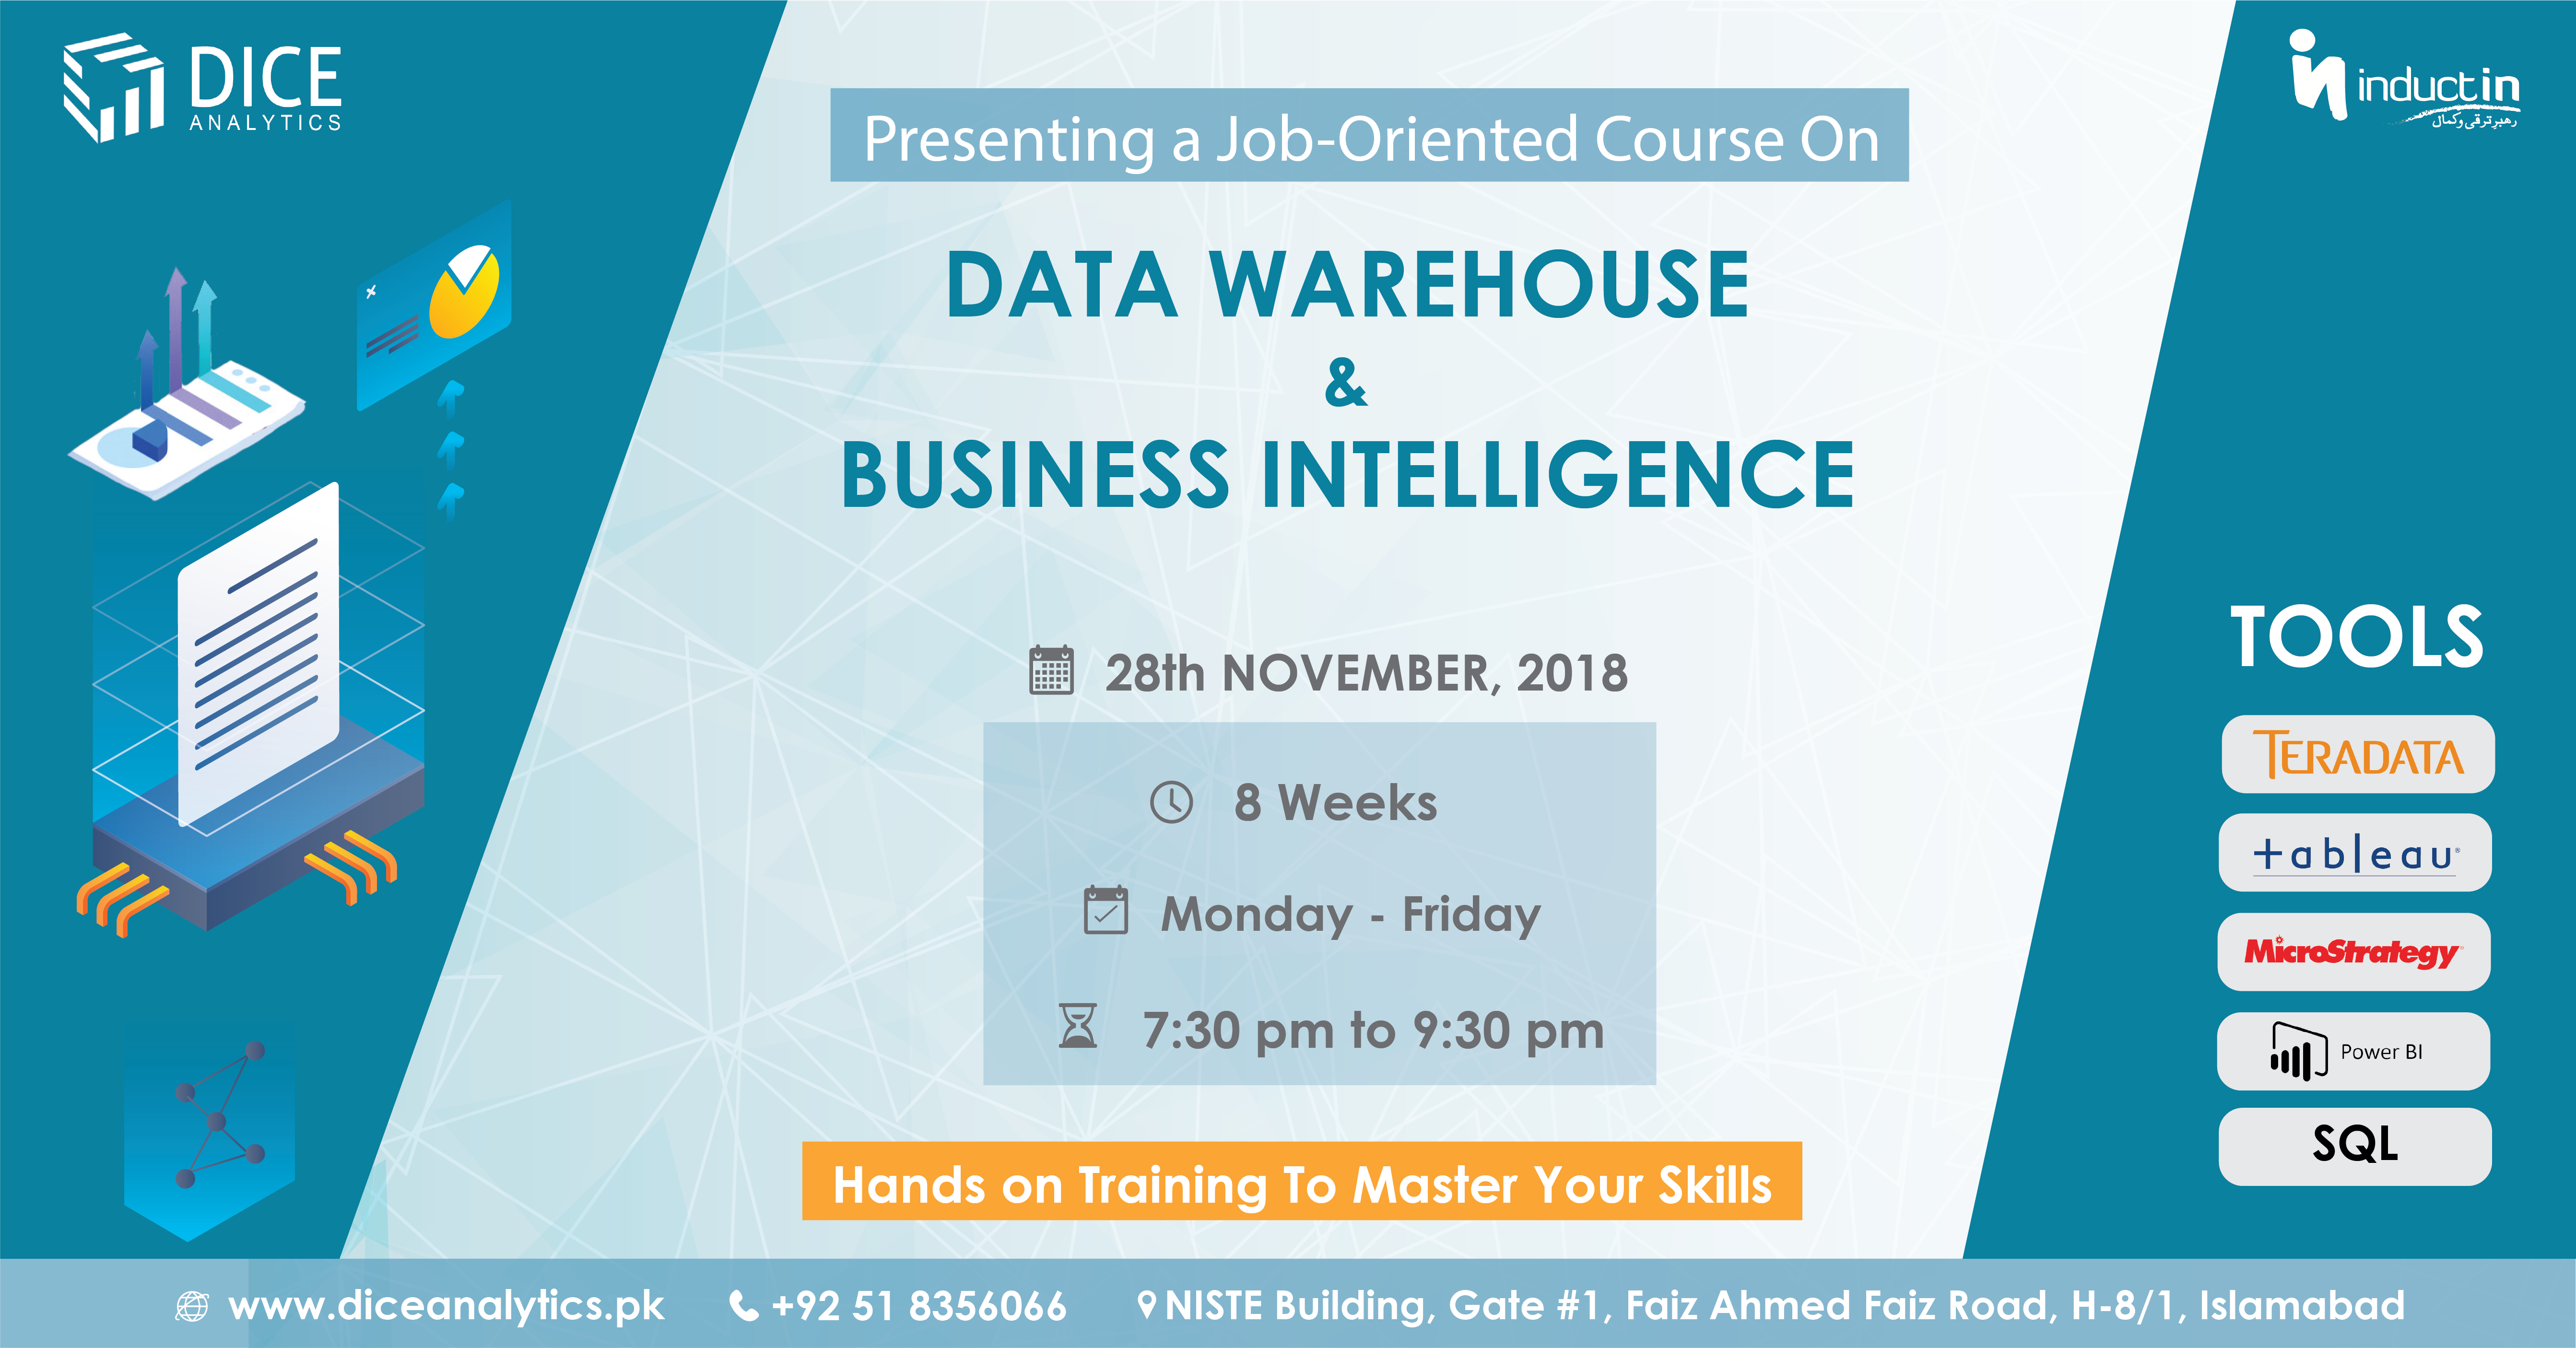 Data Warehouse & Business Intelligence Course - Dice Analytics